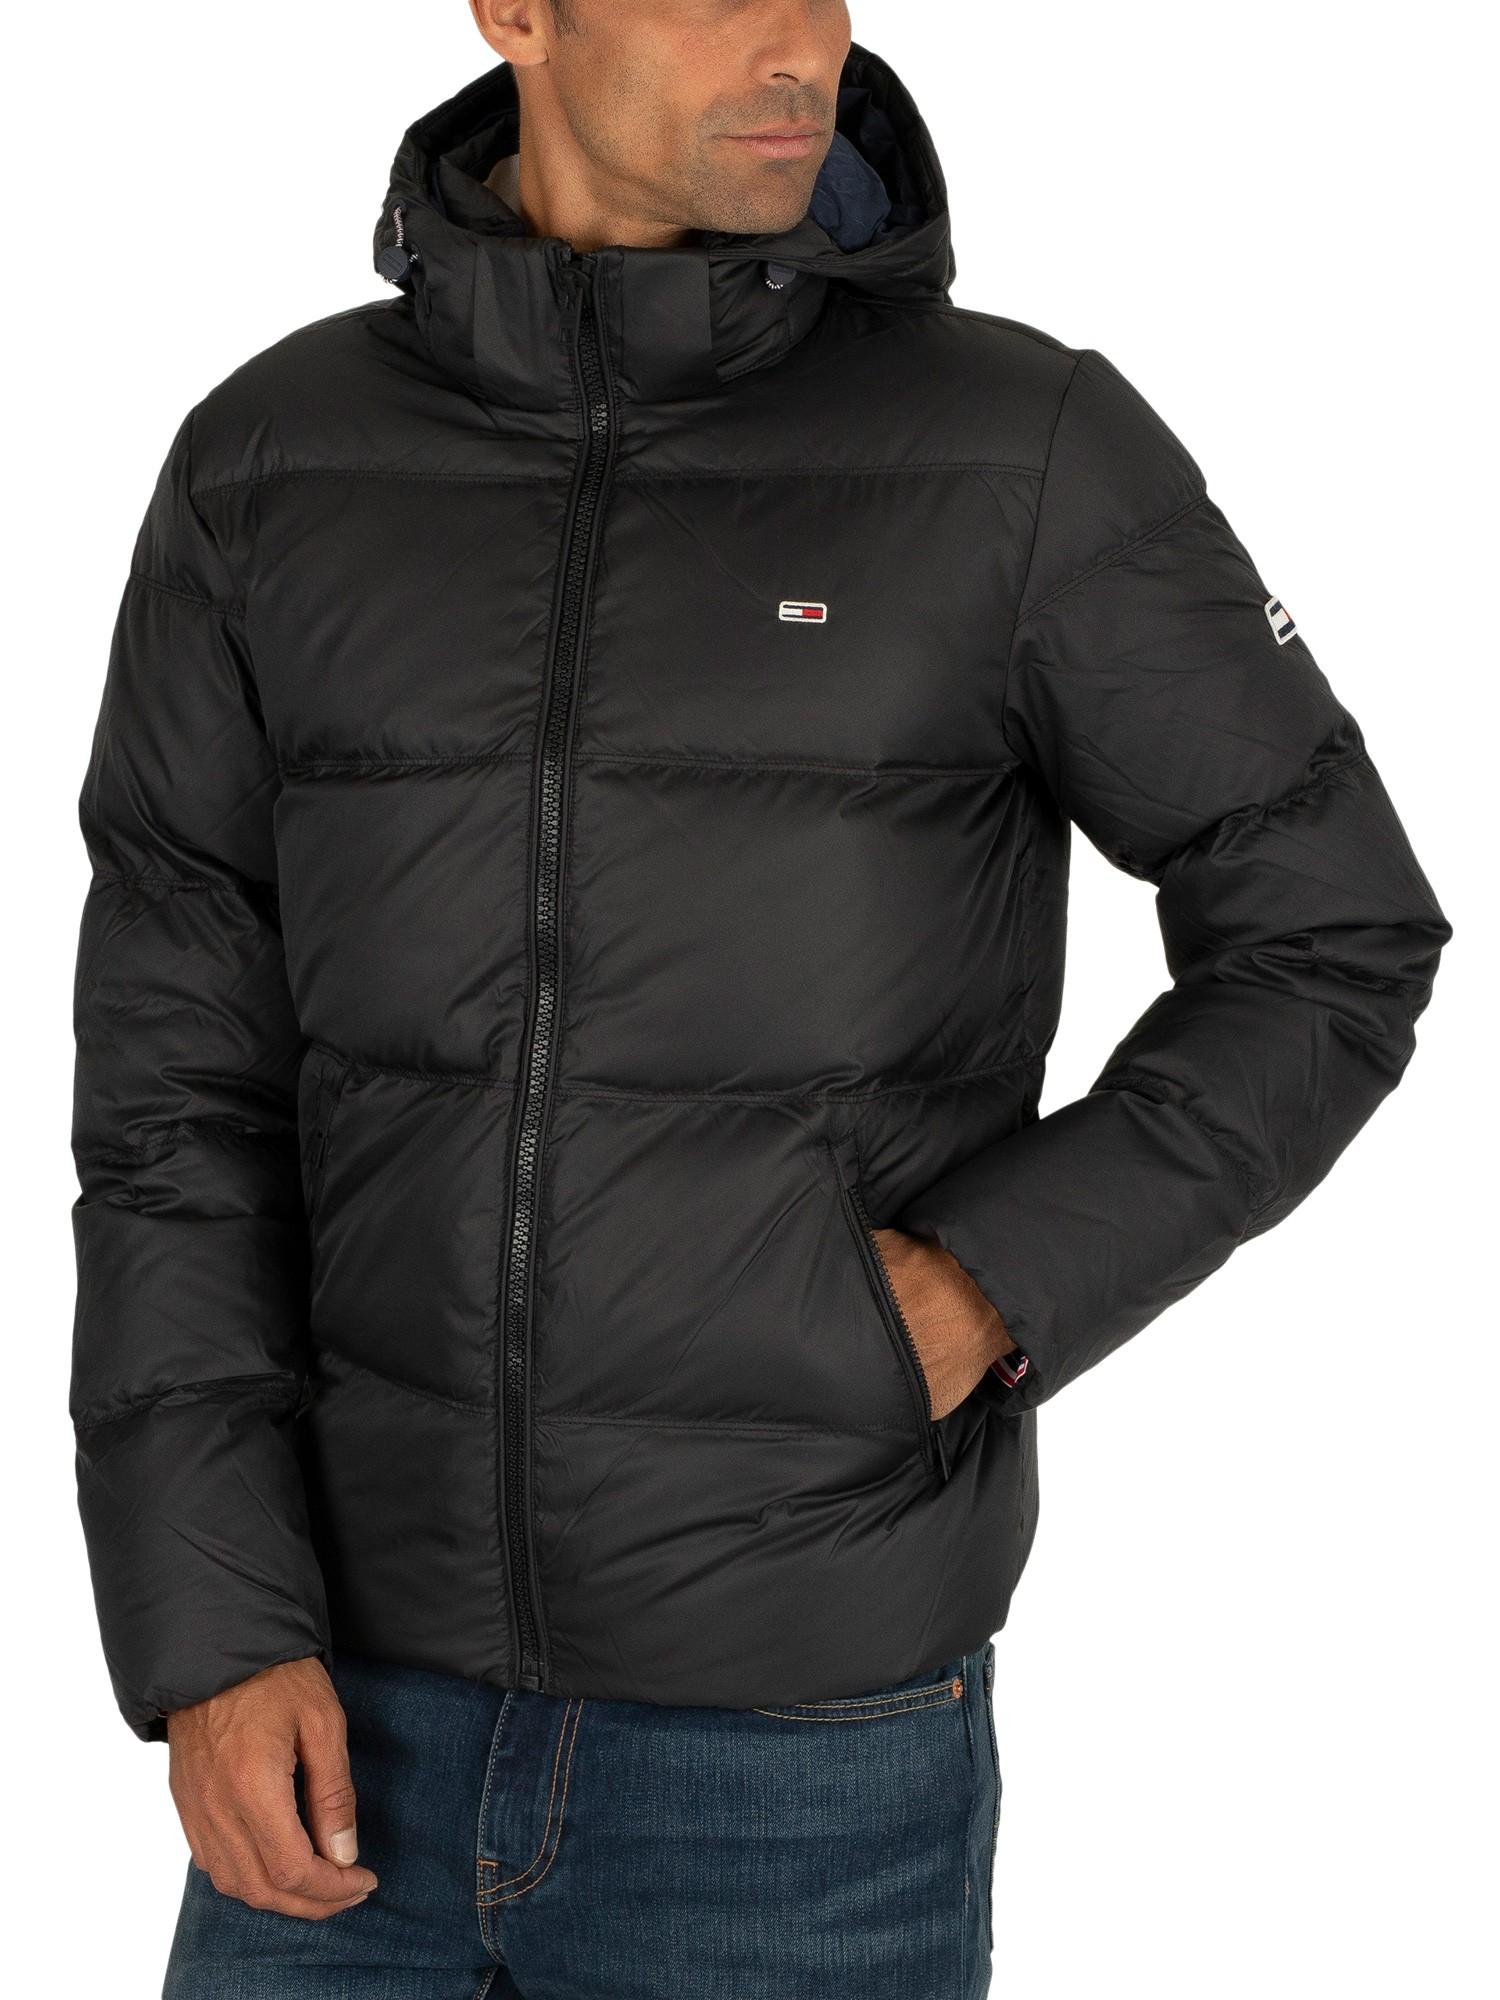 Tommy Hilfiger Denim Essential Down Jacket in Black for Men - Lyst